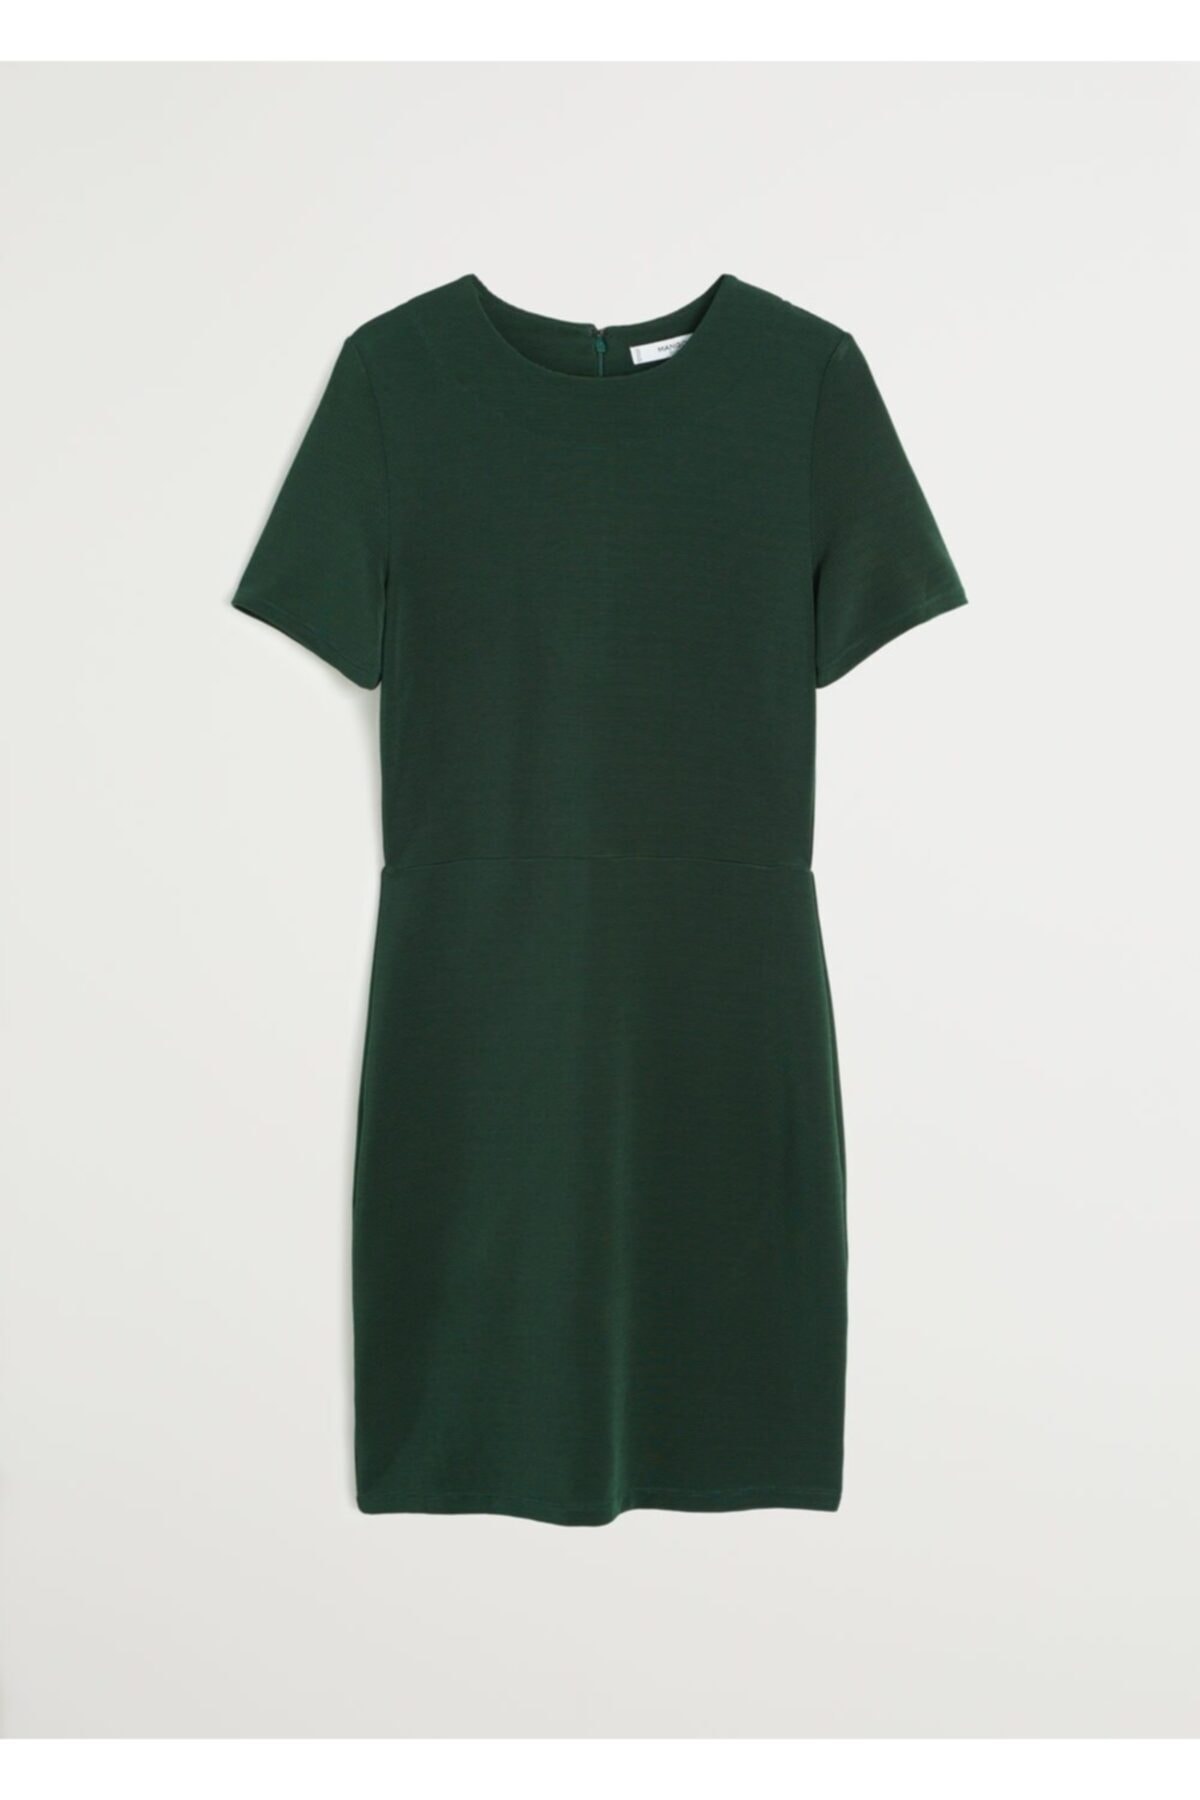 MANGO Woman Kadın Yeşil Lastikli Jarse Elbise 51043761